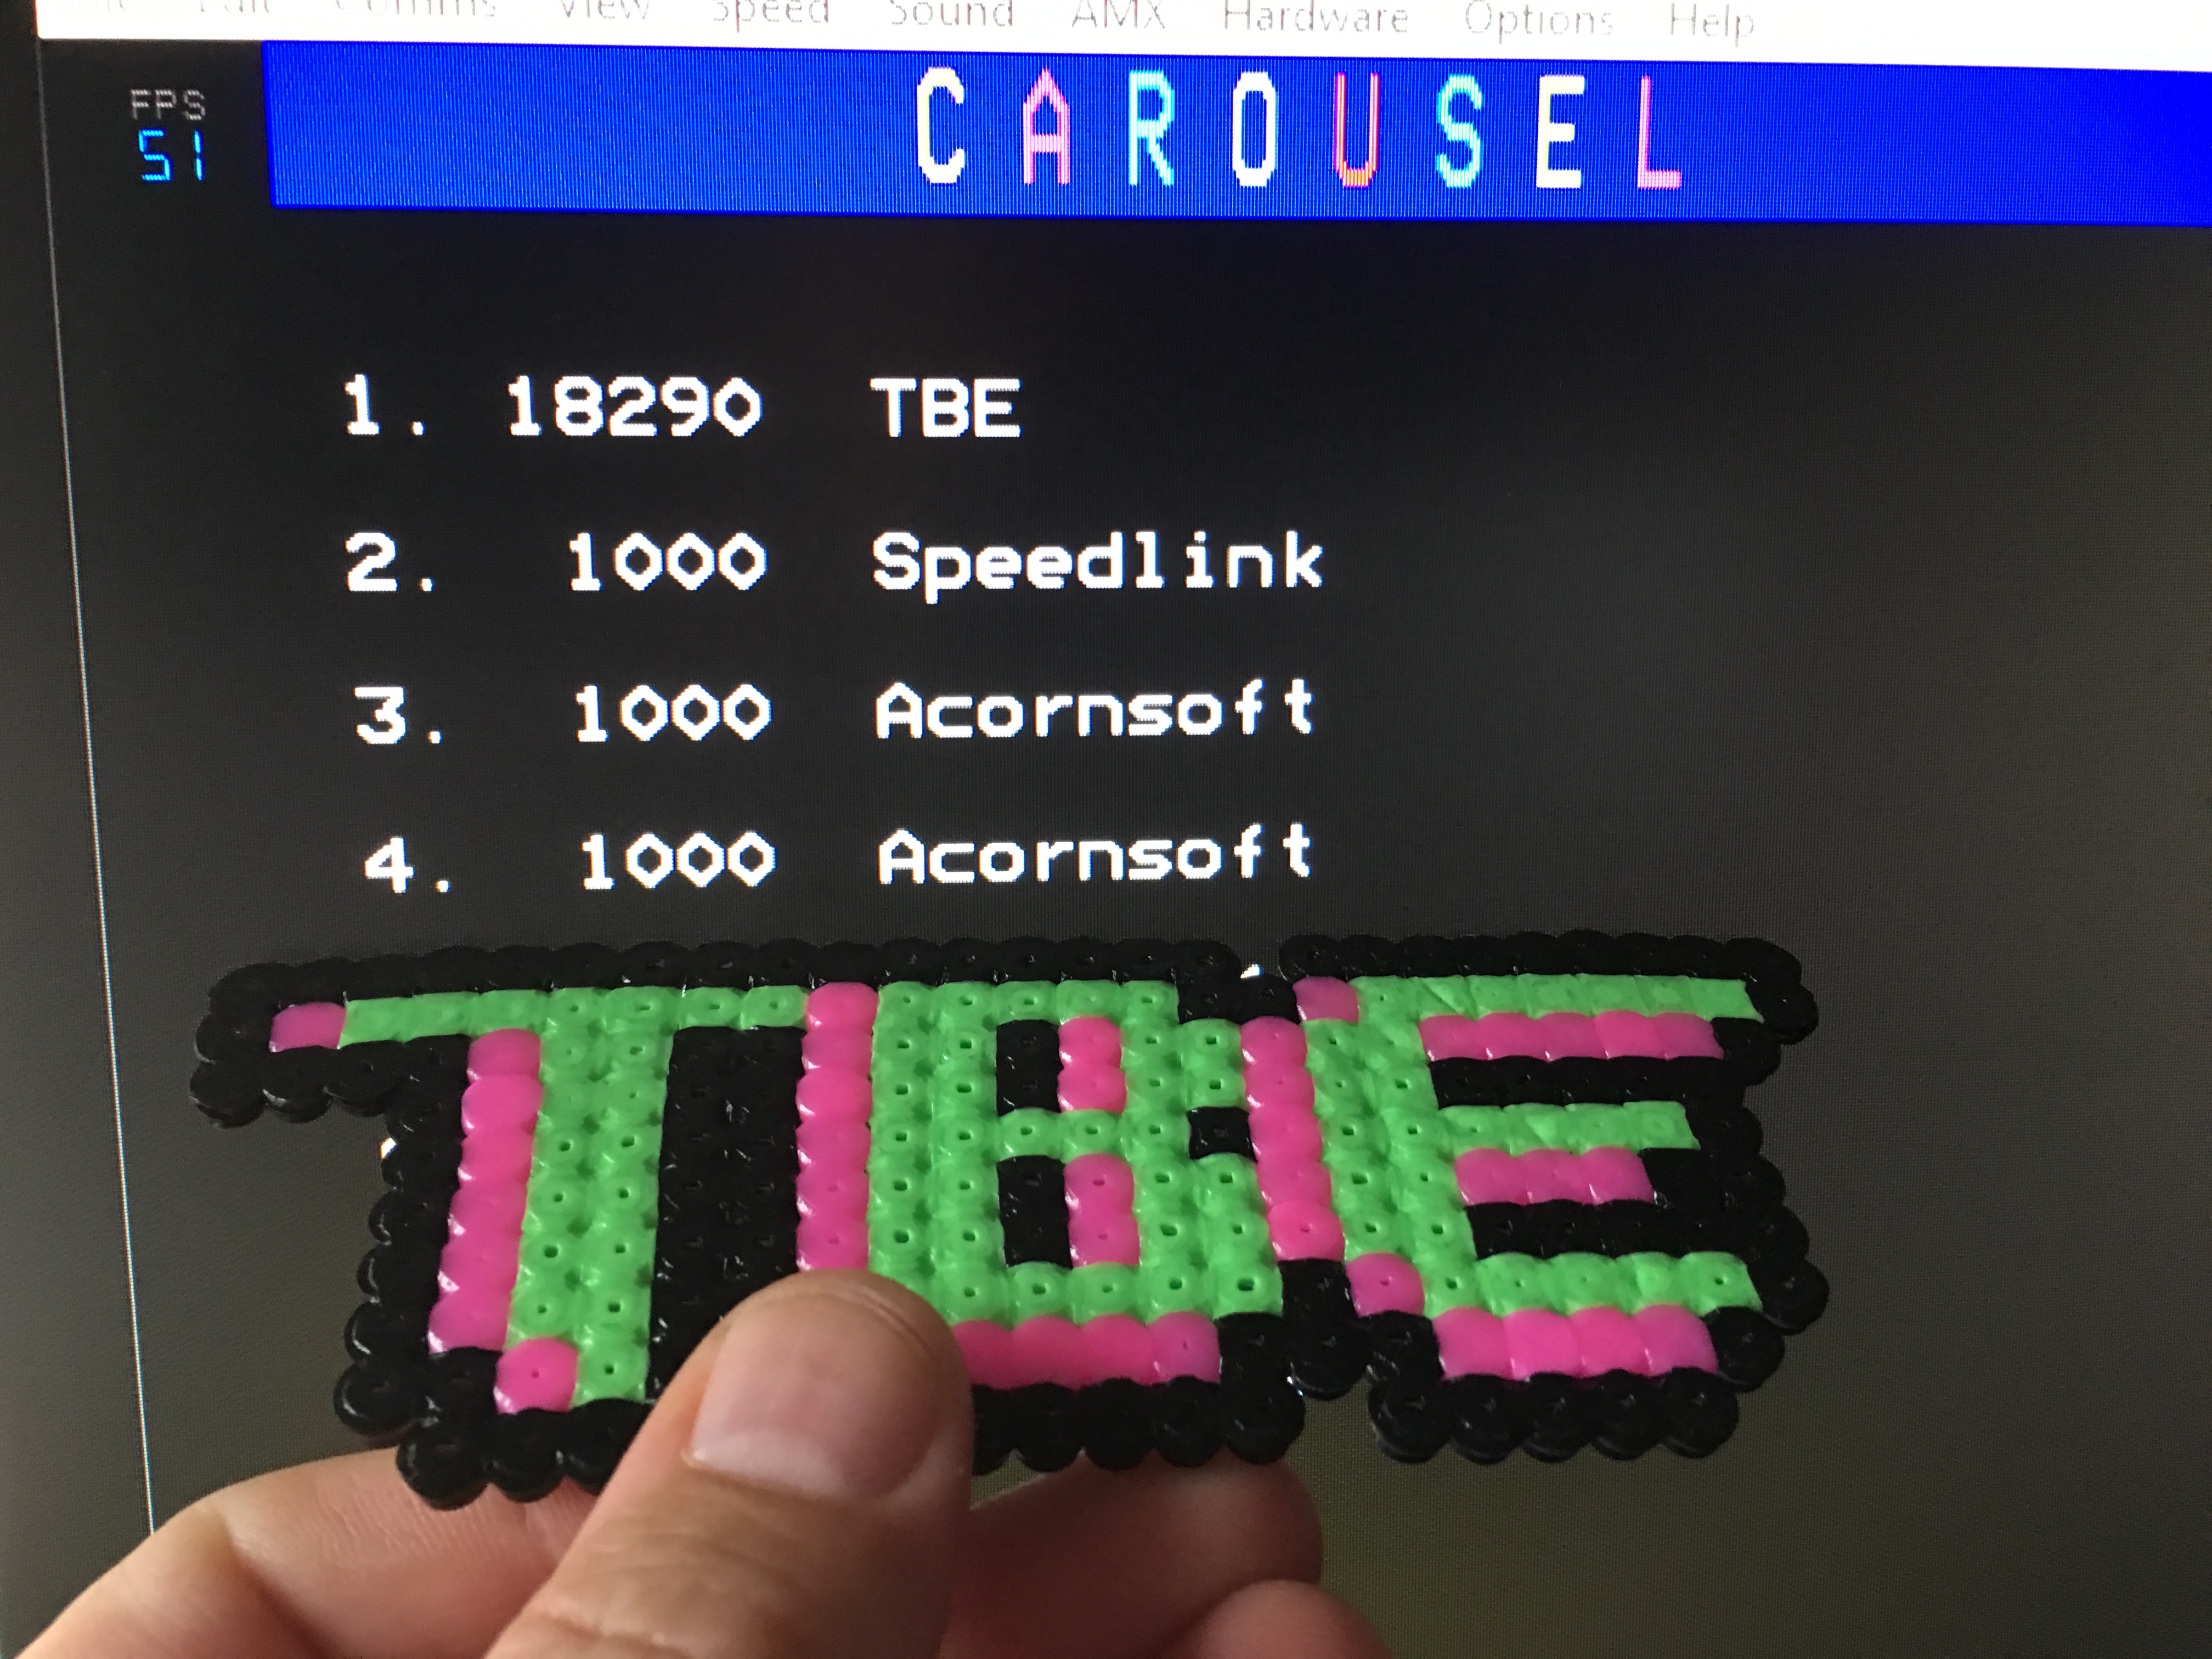 Sixx: Carousel (BBC Micro Emulated) 18,290 points on 2016-06-23 13:00:21